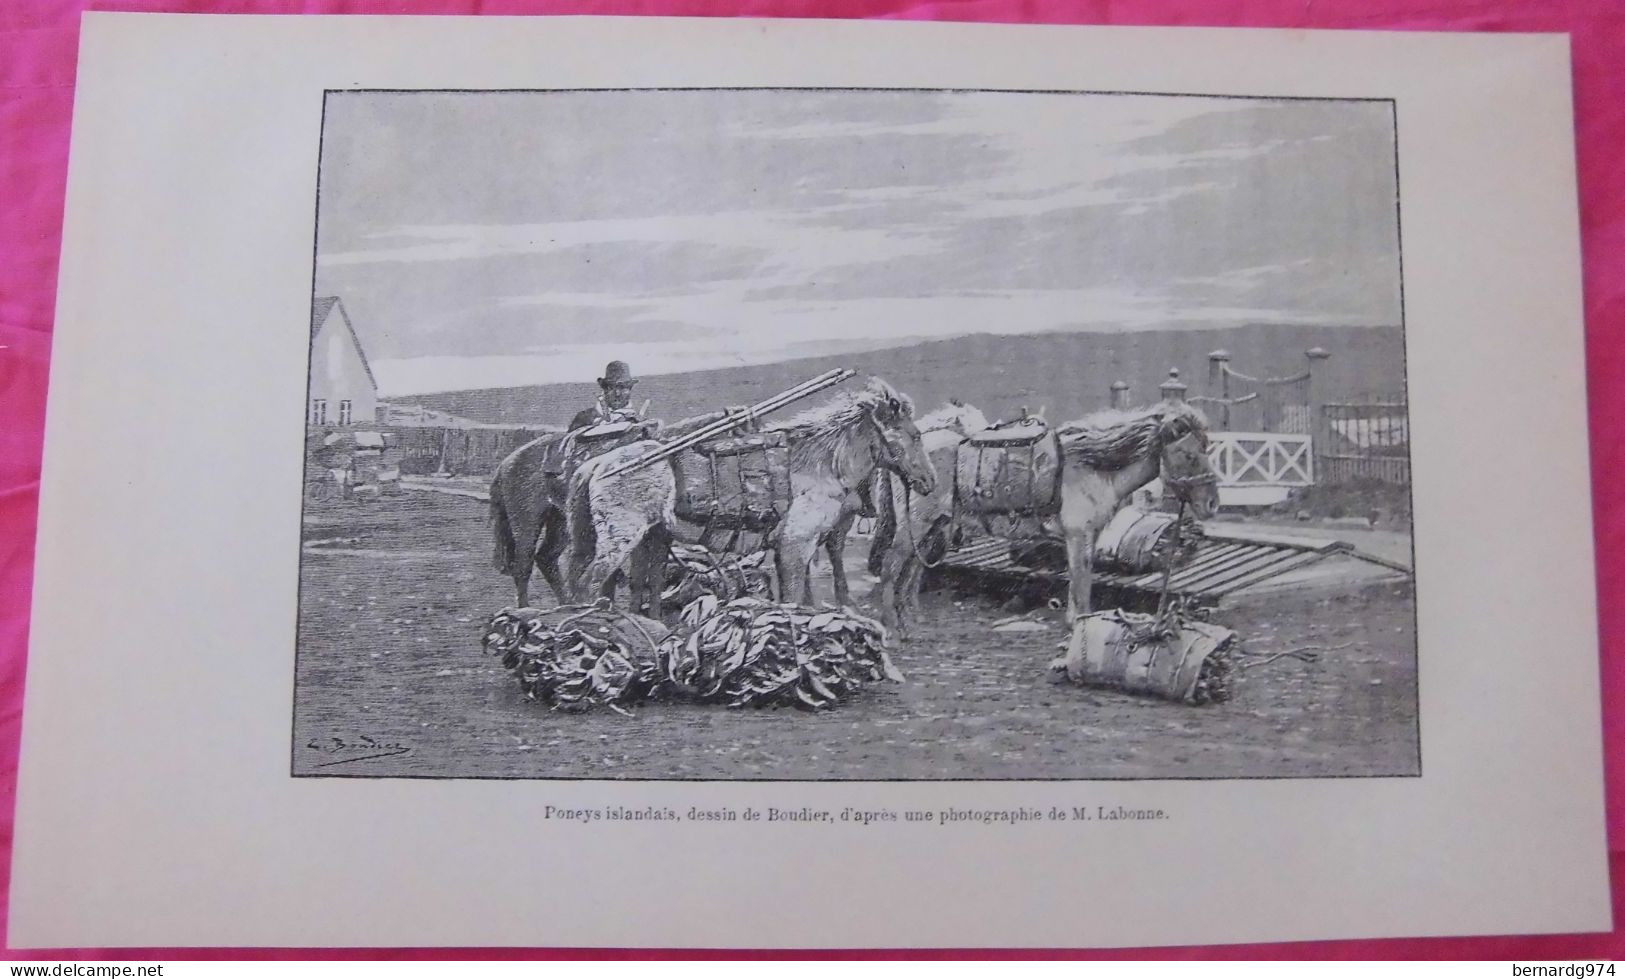 Islande Island : nine antique prints